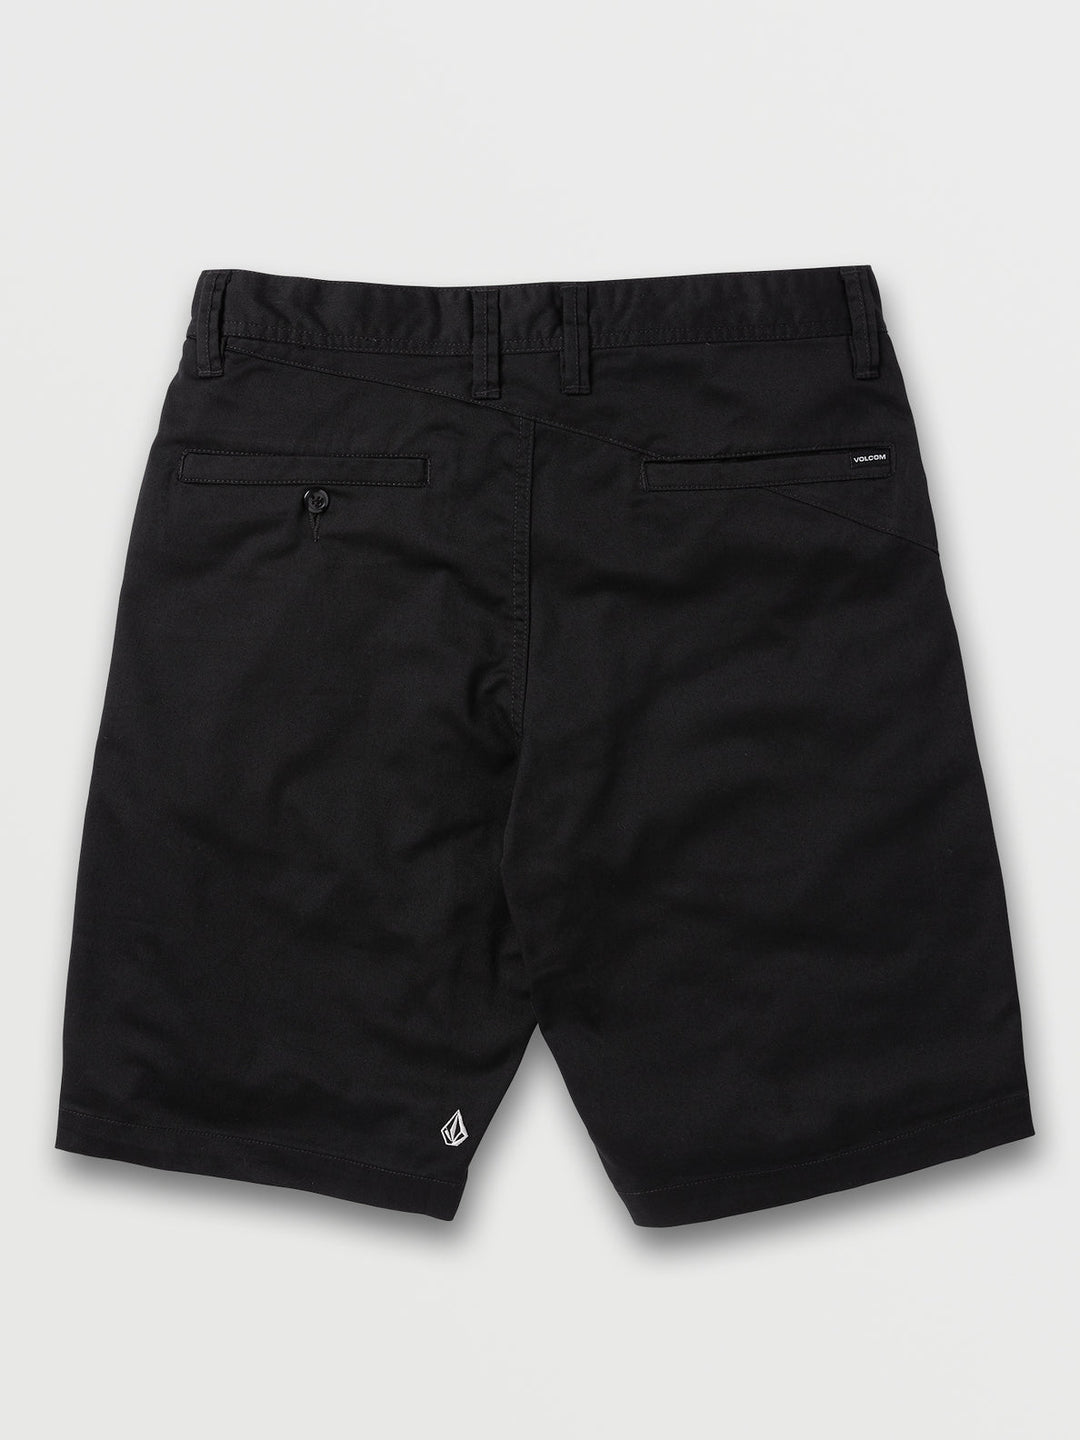 Volcom Frickin Modern Stretch Shorts - Black - Sun Diego Boardshop